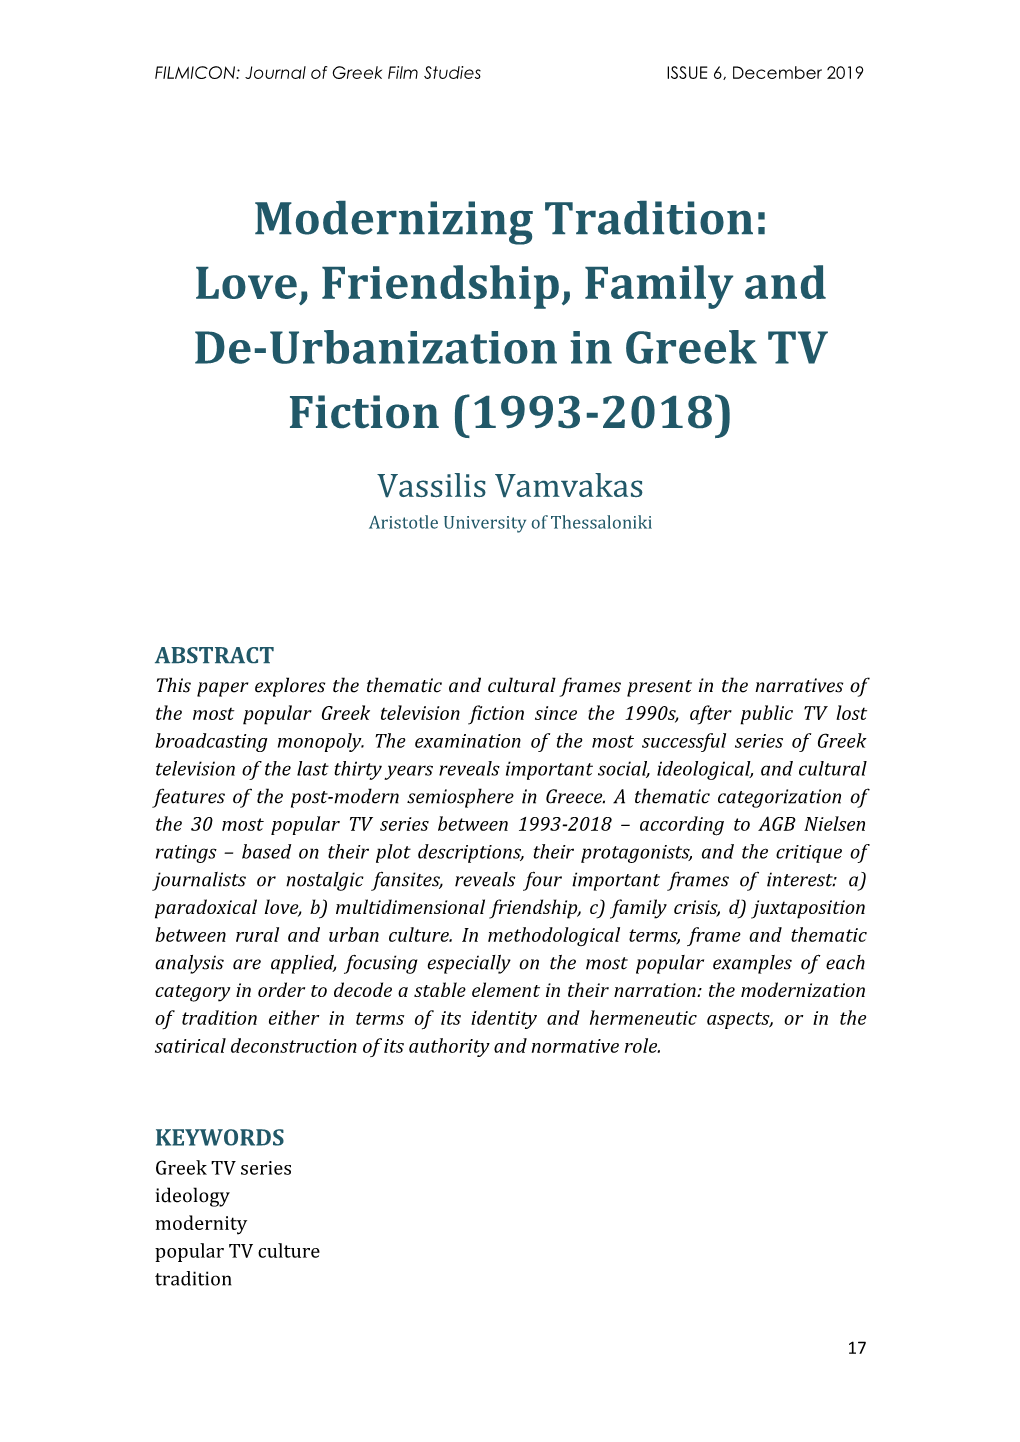 Love, Friendship, Family and De-Urbanization in Greek TV Fiction (1993-2018) Vassilis Vamvakas Aristotle University of Thessaloniki